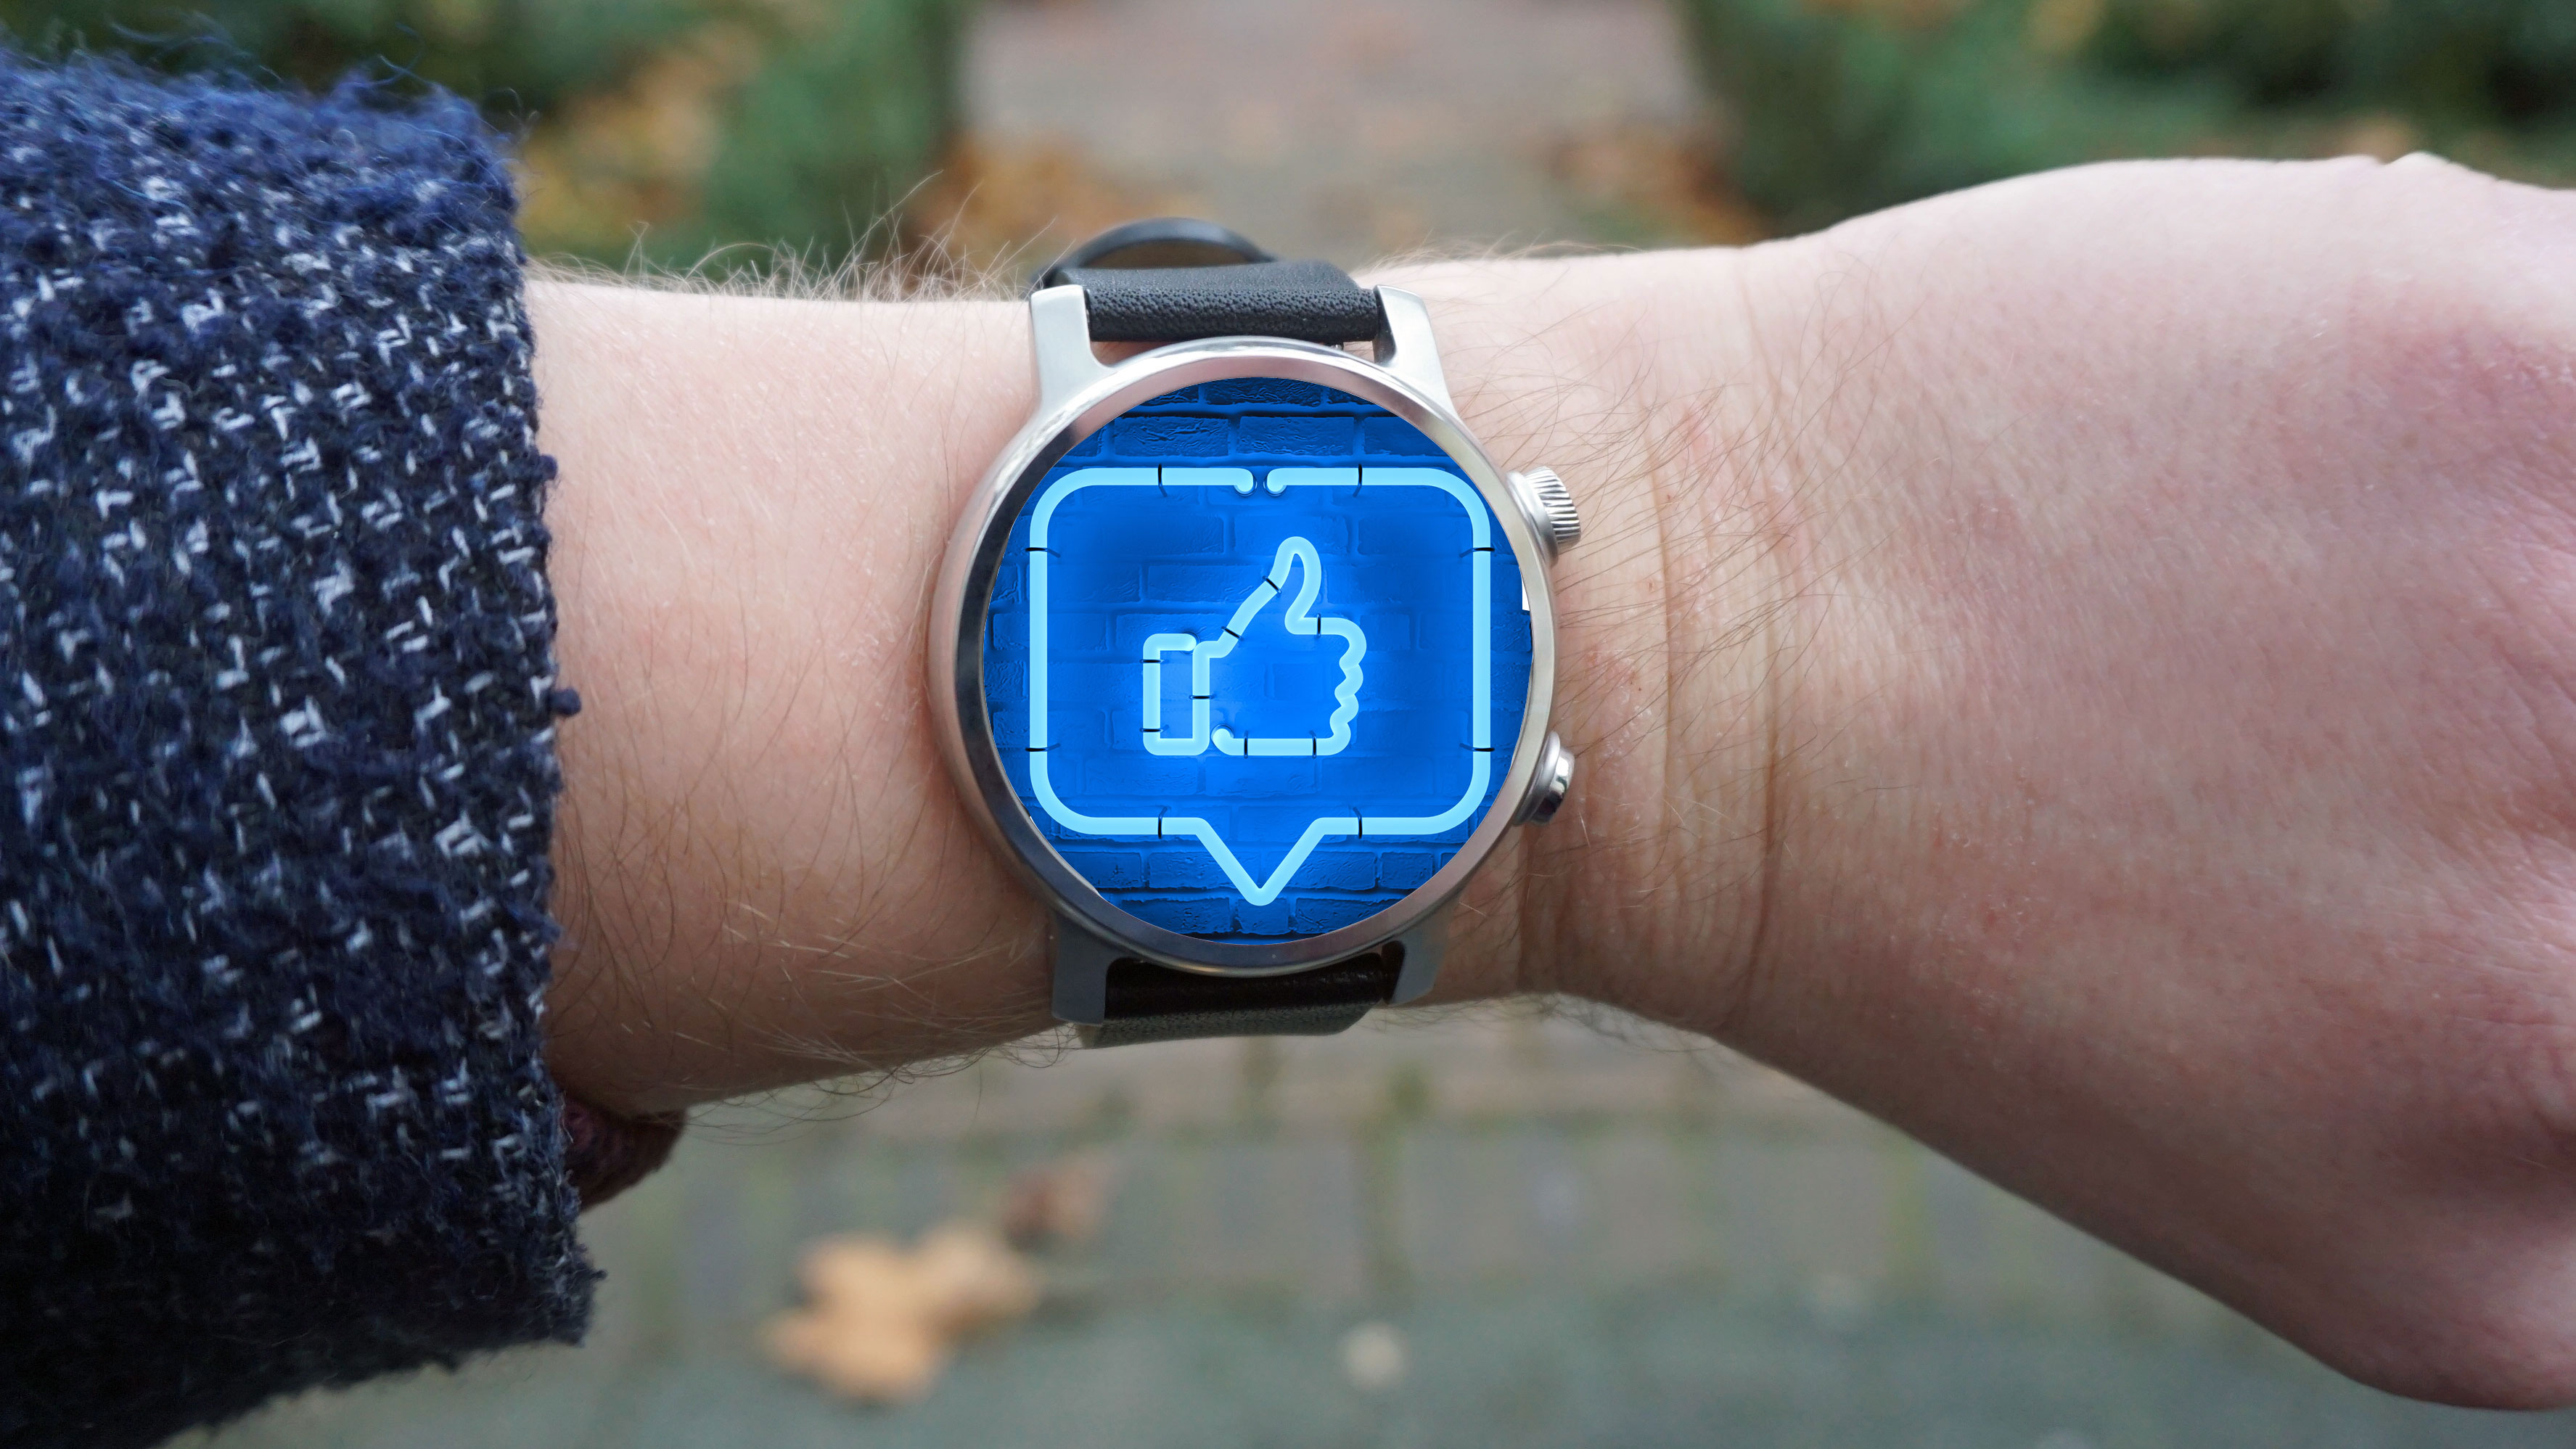 Not a Meta Smartwatch, but a Moto 360 with Facebook tick